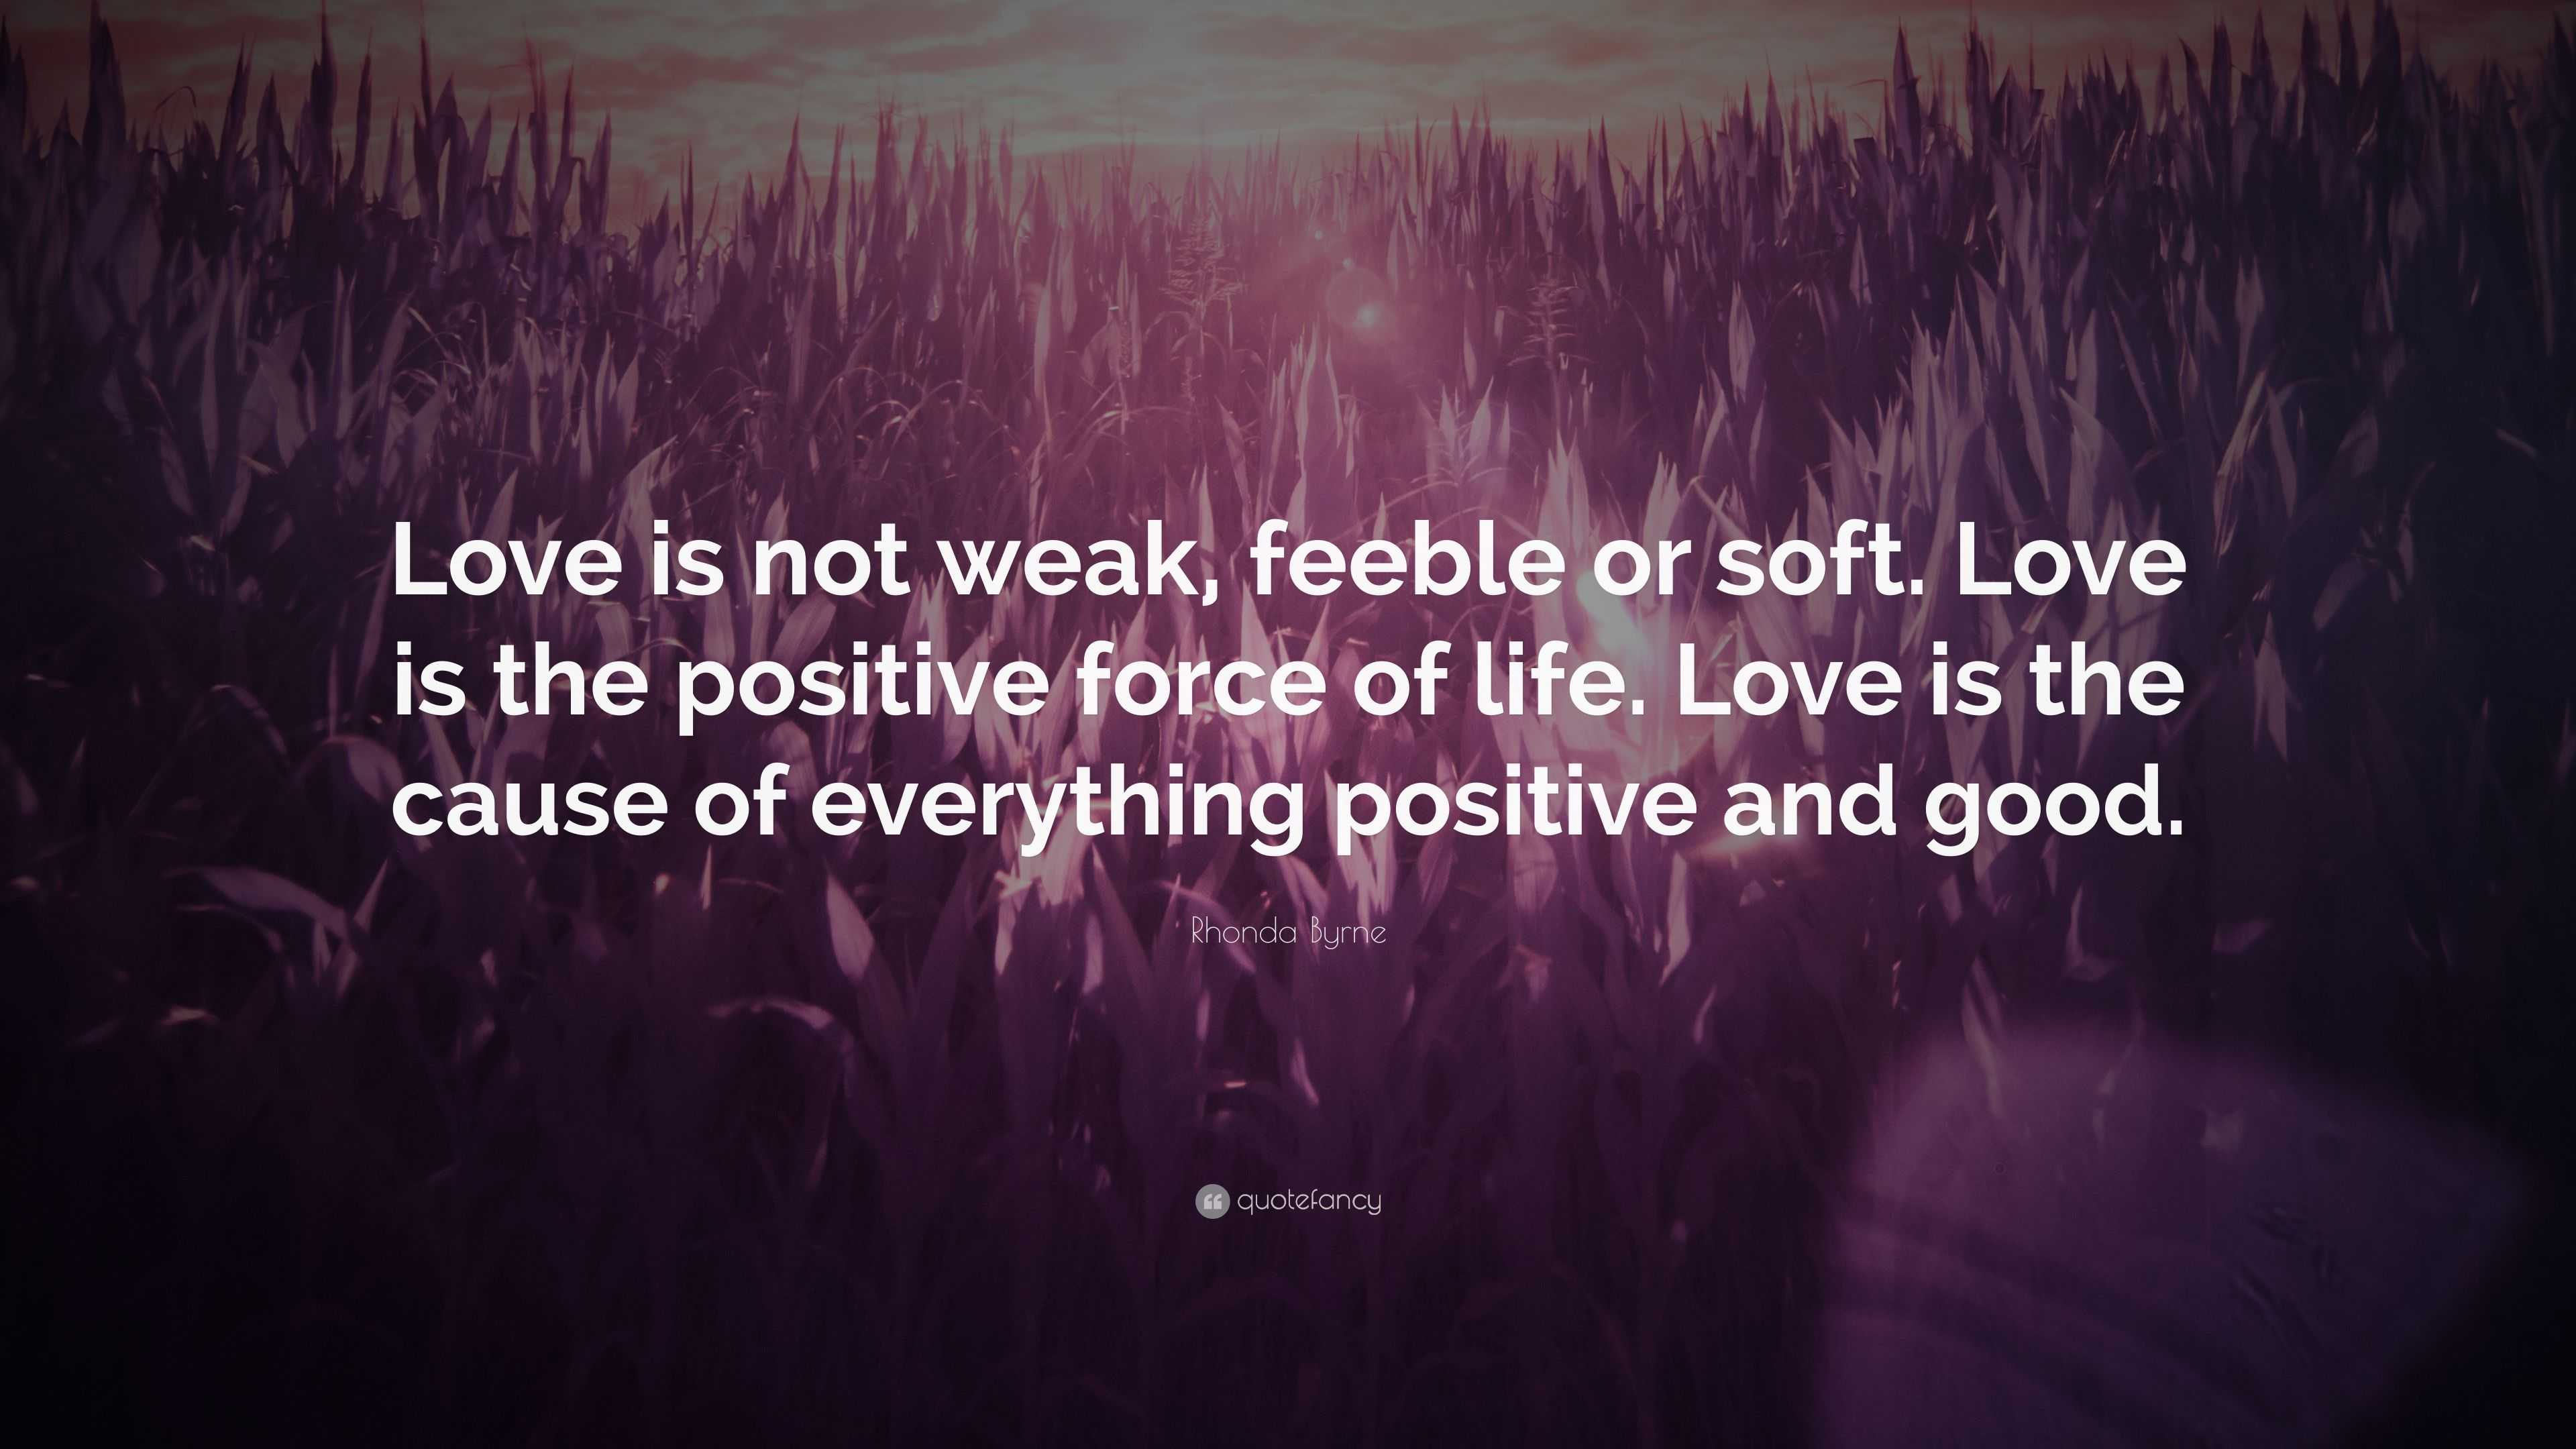 Rhonda Byrne Quote “Love is not weak feeble or soft Love is